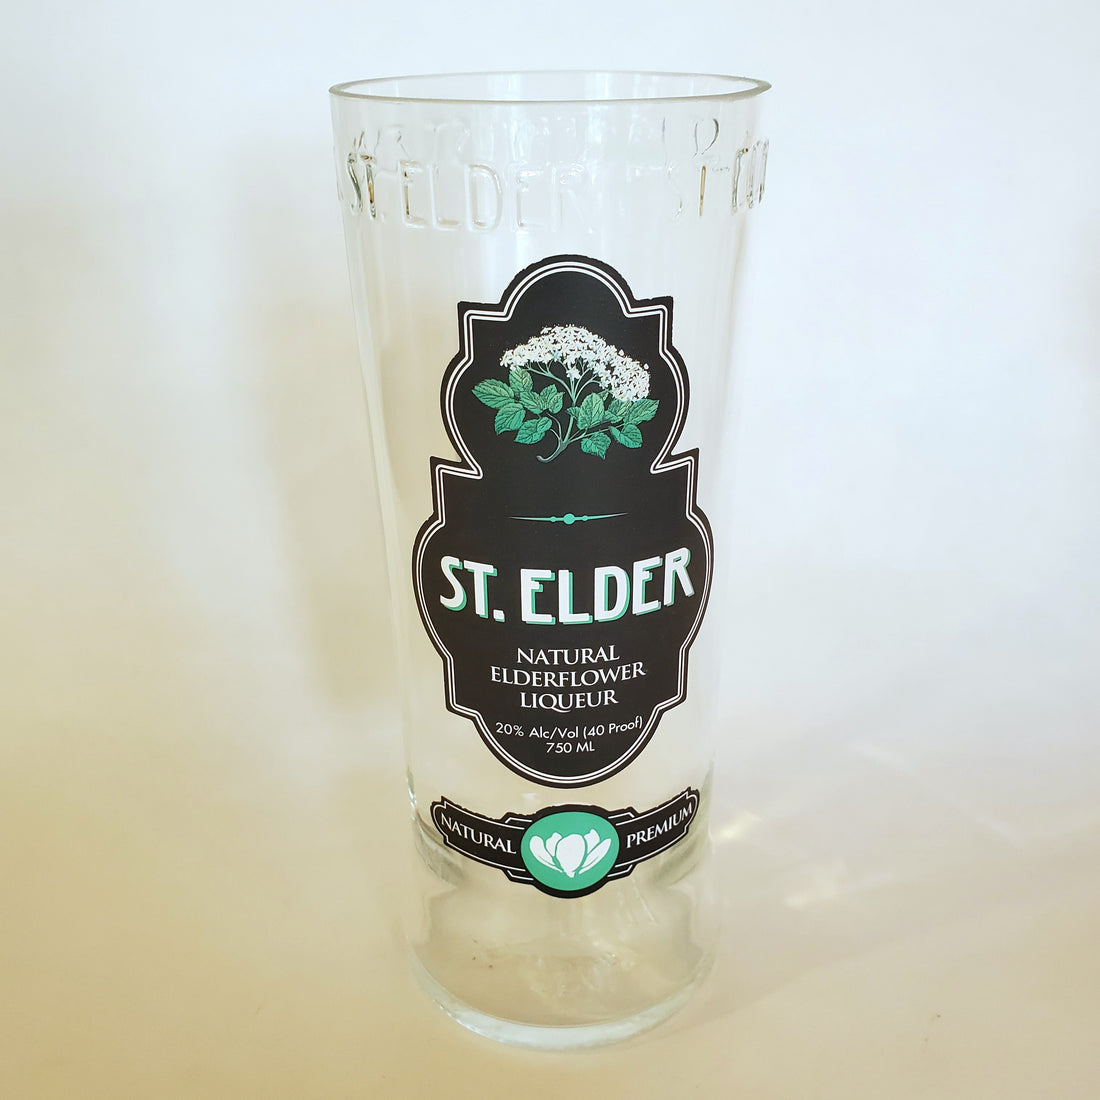 St. Elder Elderflower Liqueur 750ML Hand Cut Upcycled Liquor Bottle Candle - Choose Your Scent